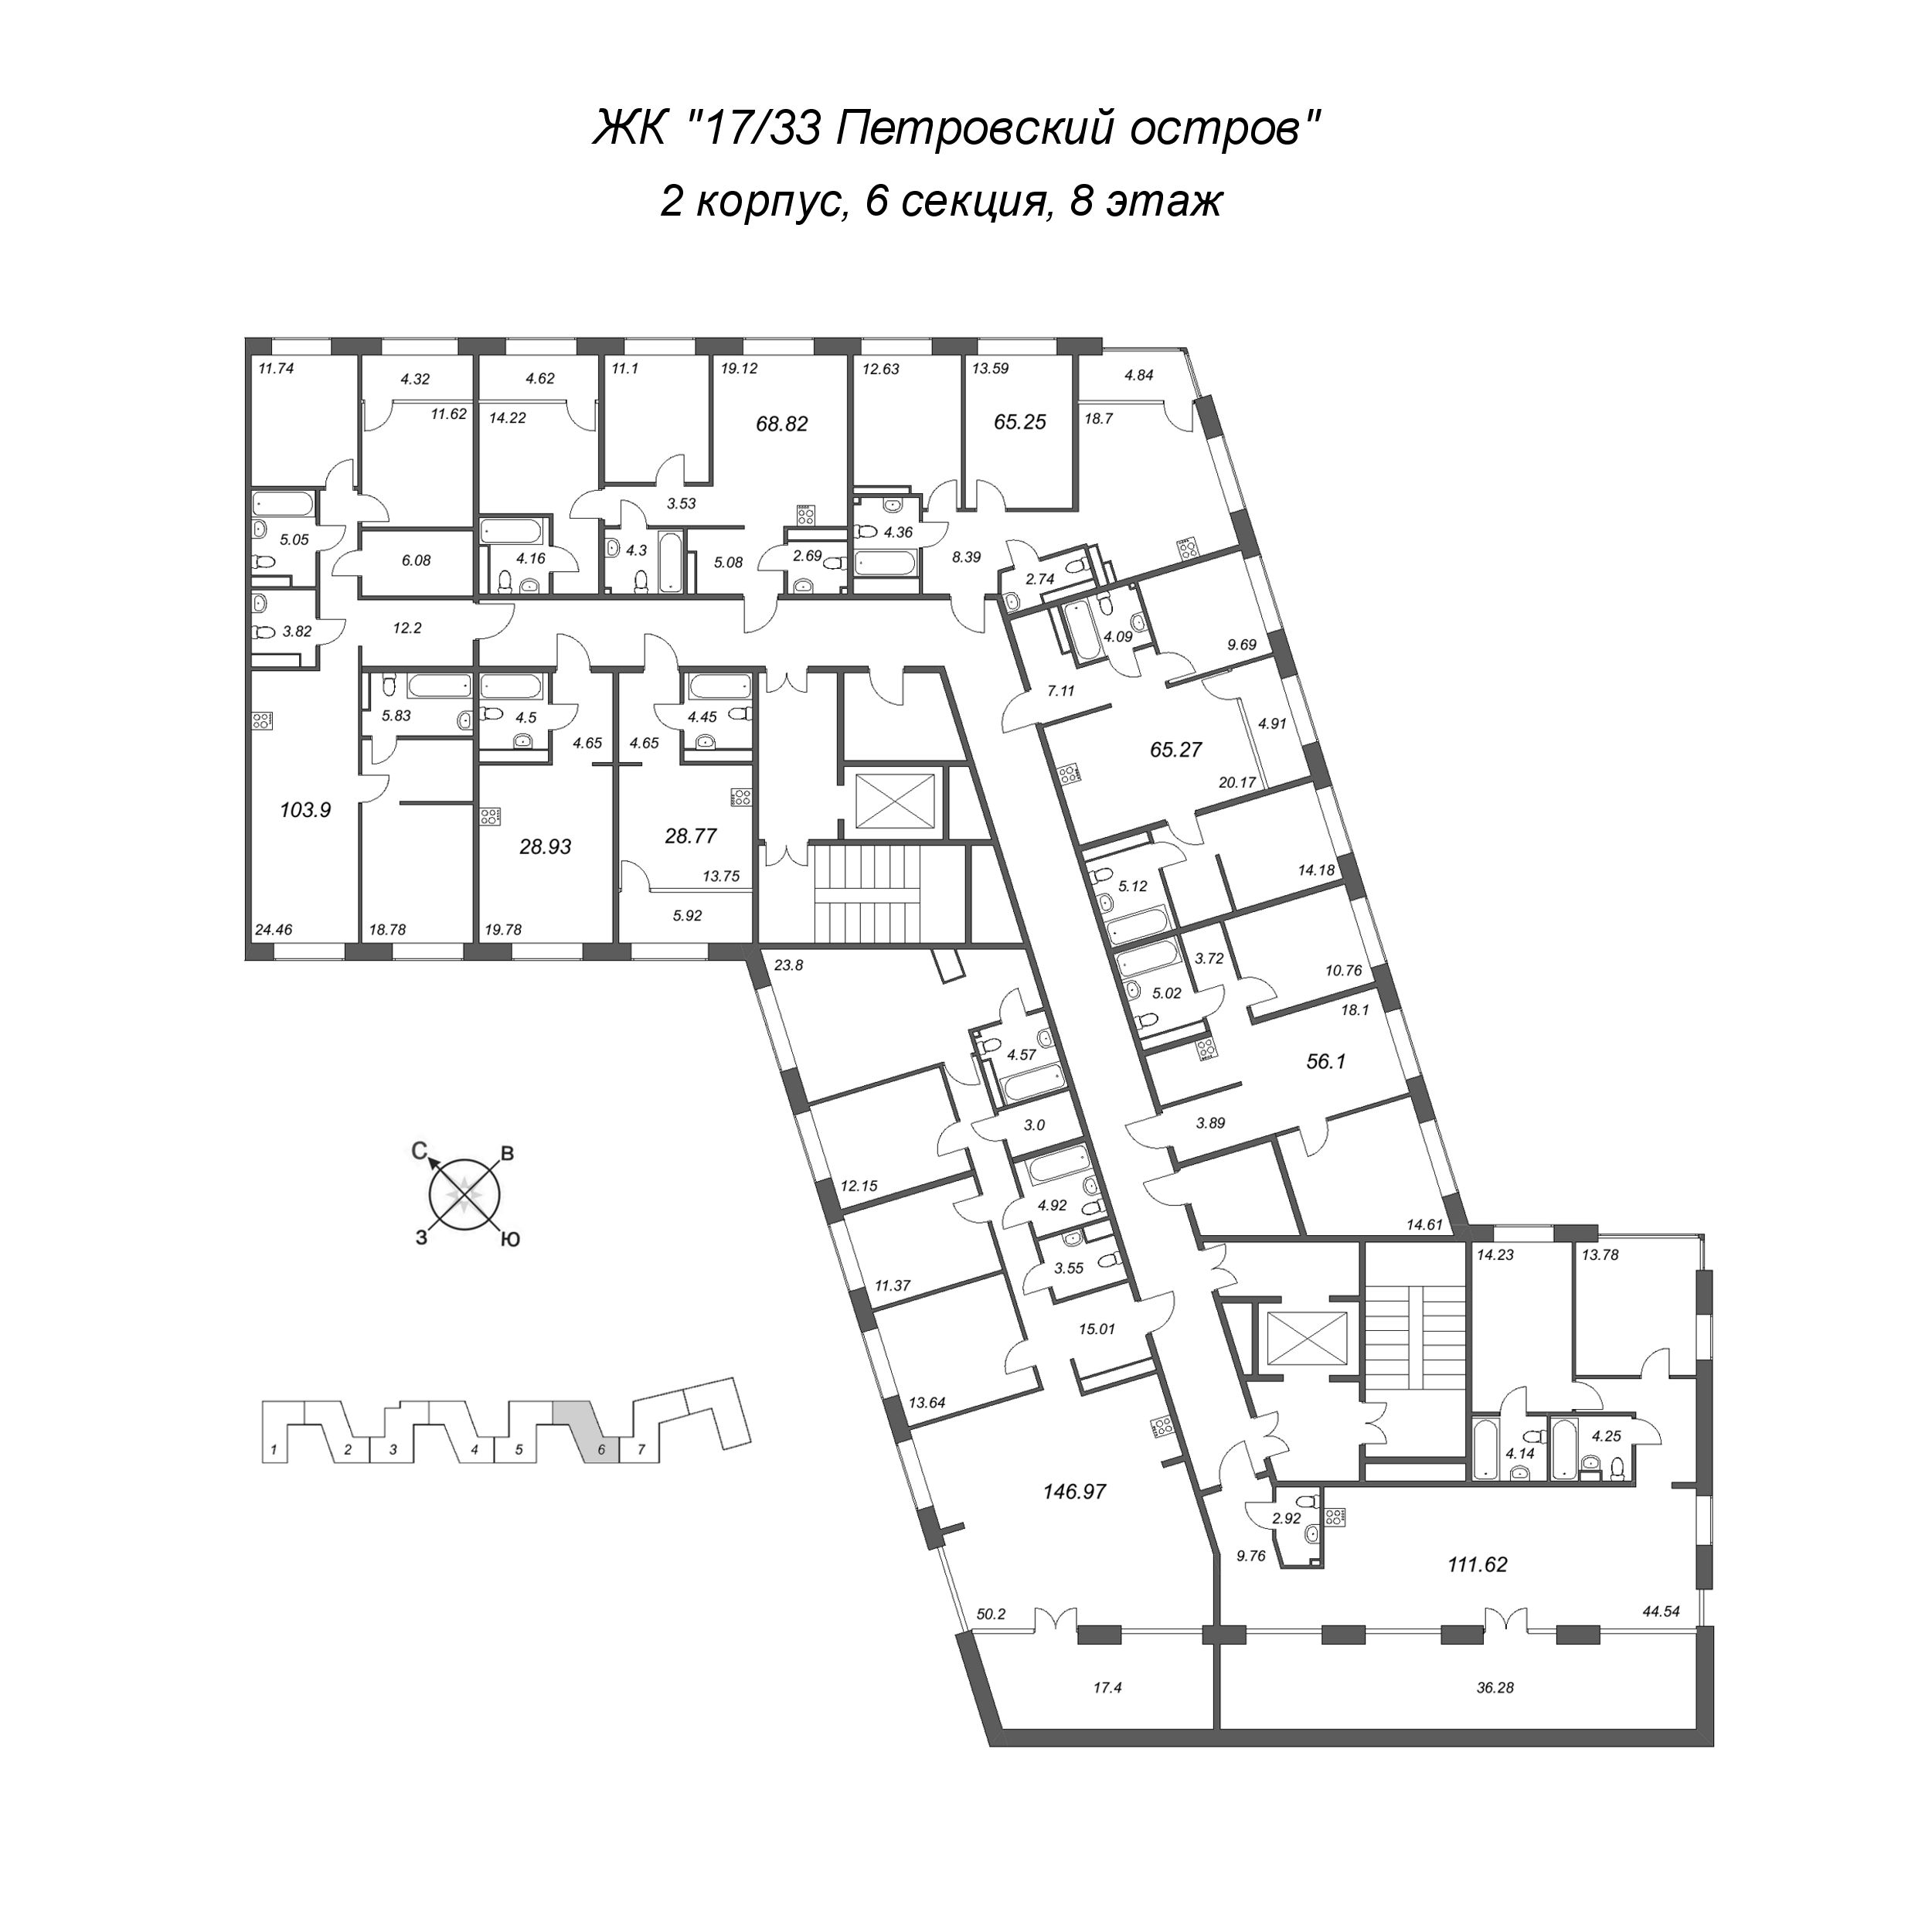 4-комнатная (Евро) квартира, 103.9 м² - планировка этажа